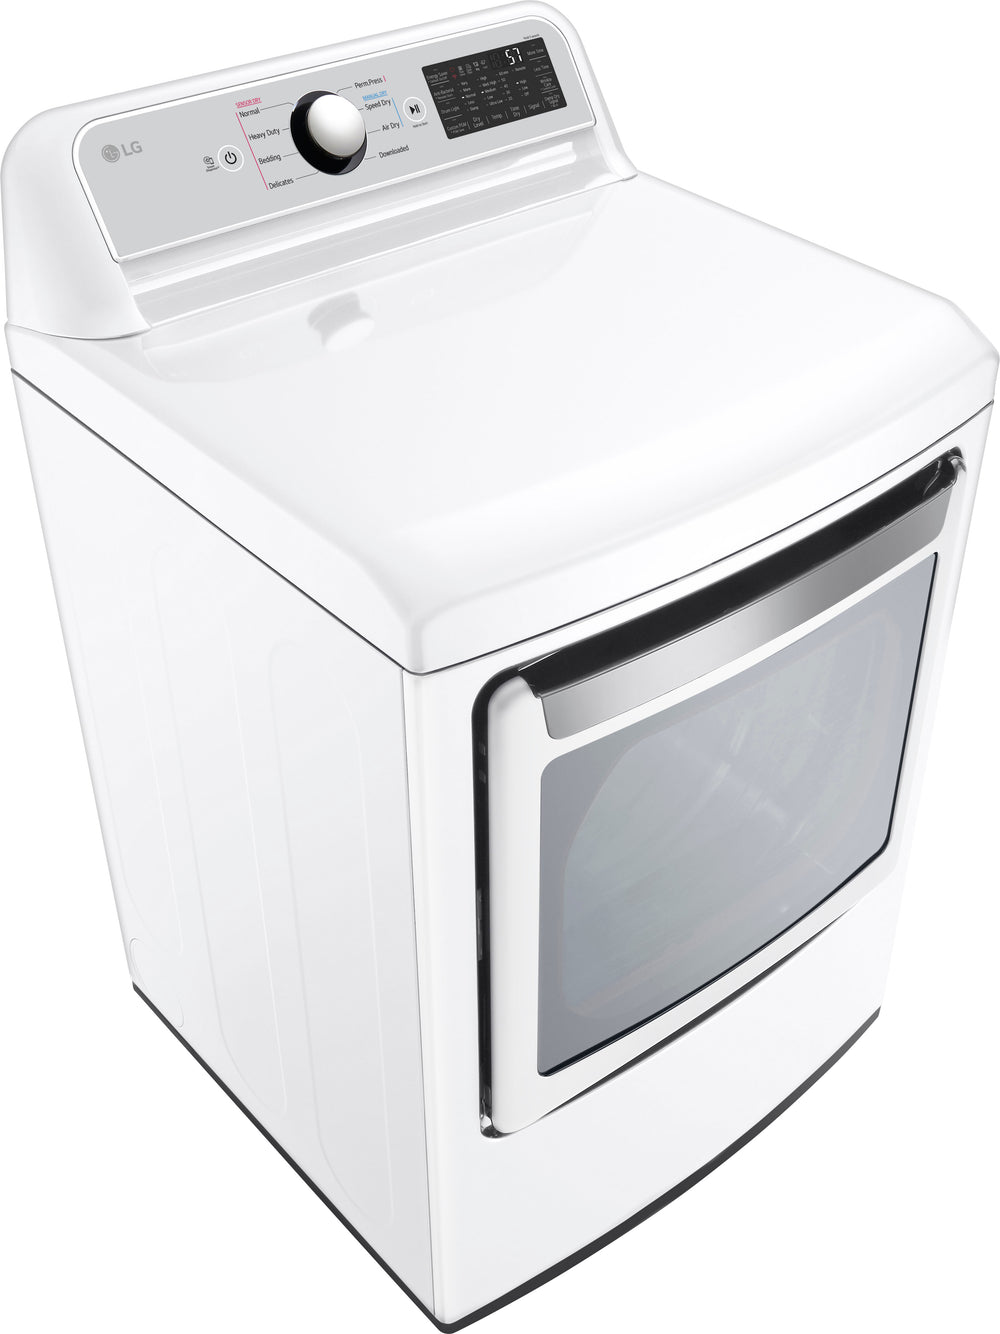 LG - 7.3 Cu. Ft. Smart Gas Dryer with EasyLoad Door - White_1